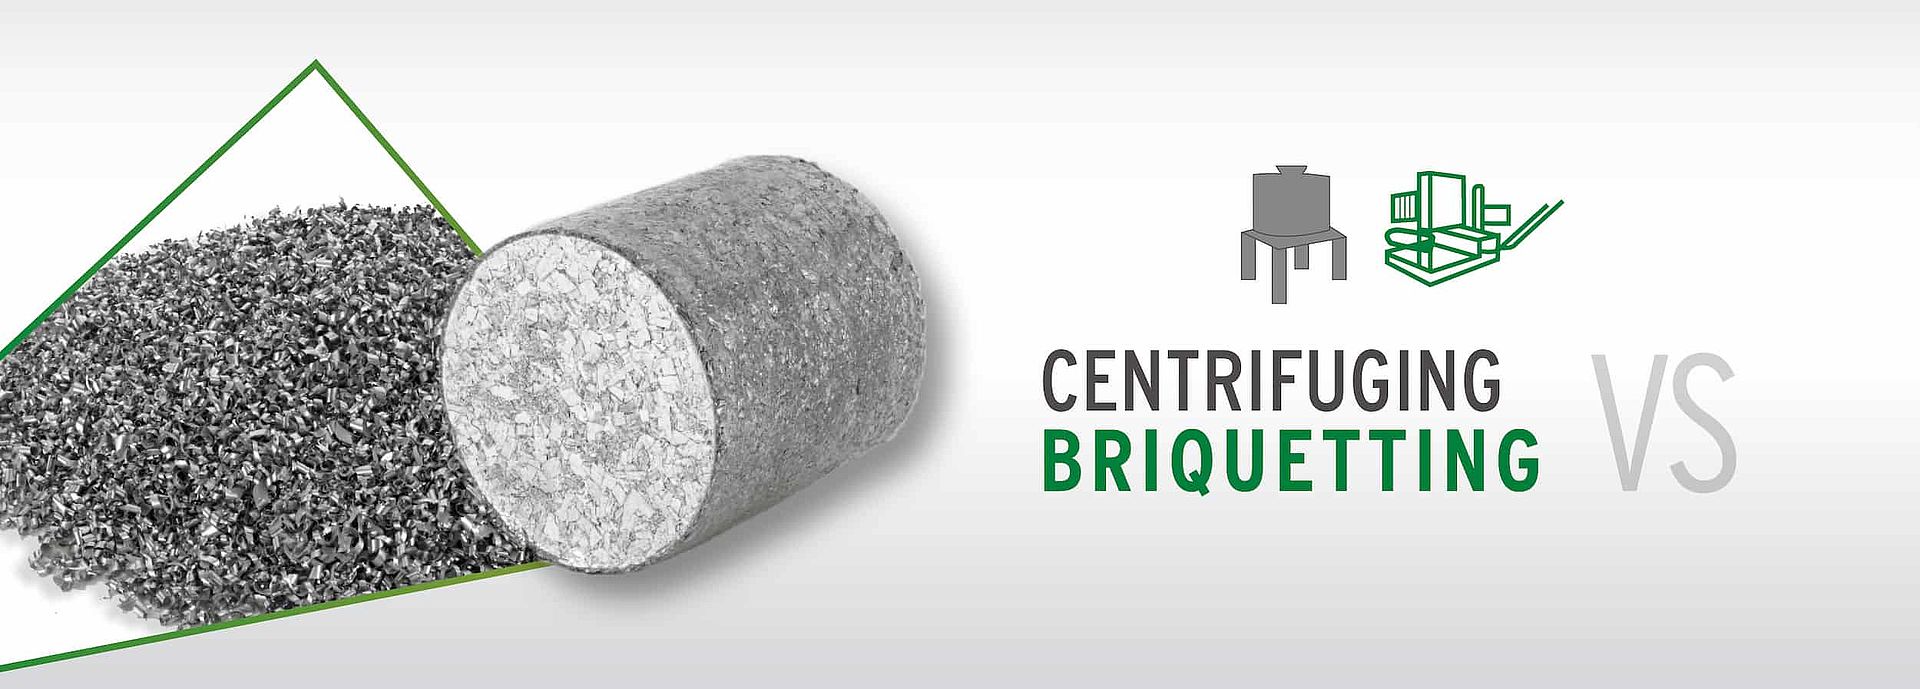 Centrifuging vs. Briquetting